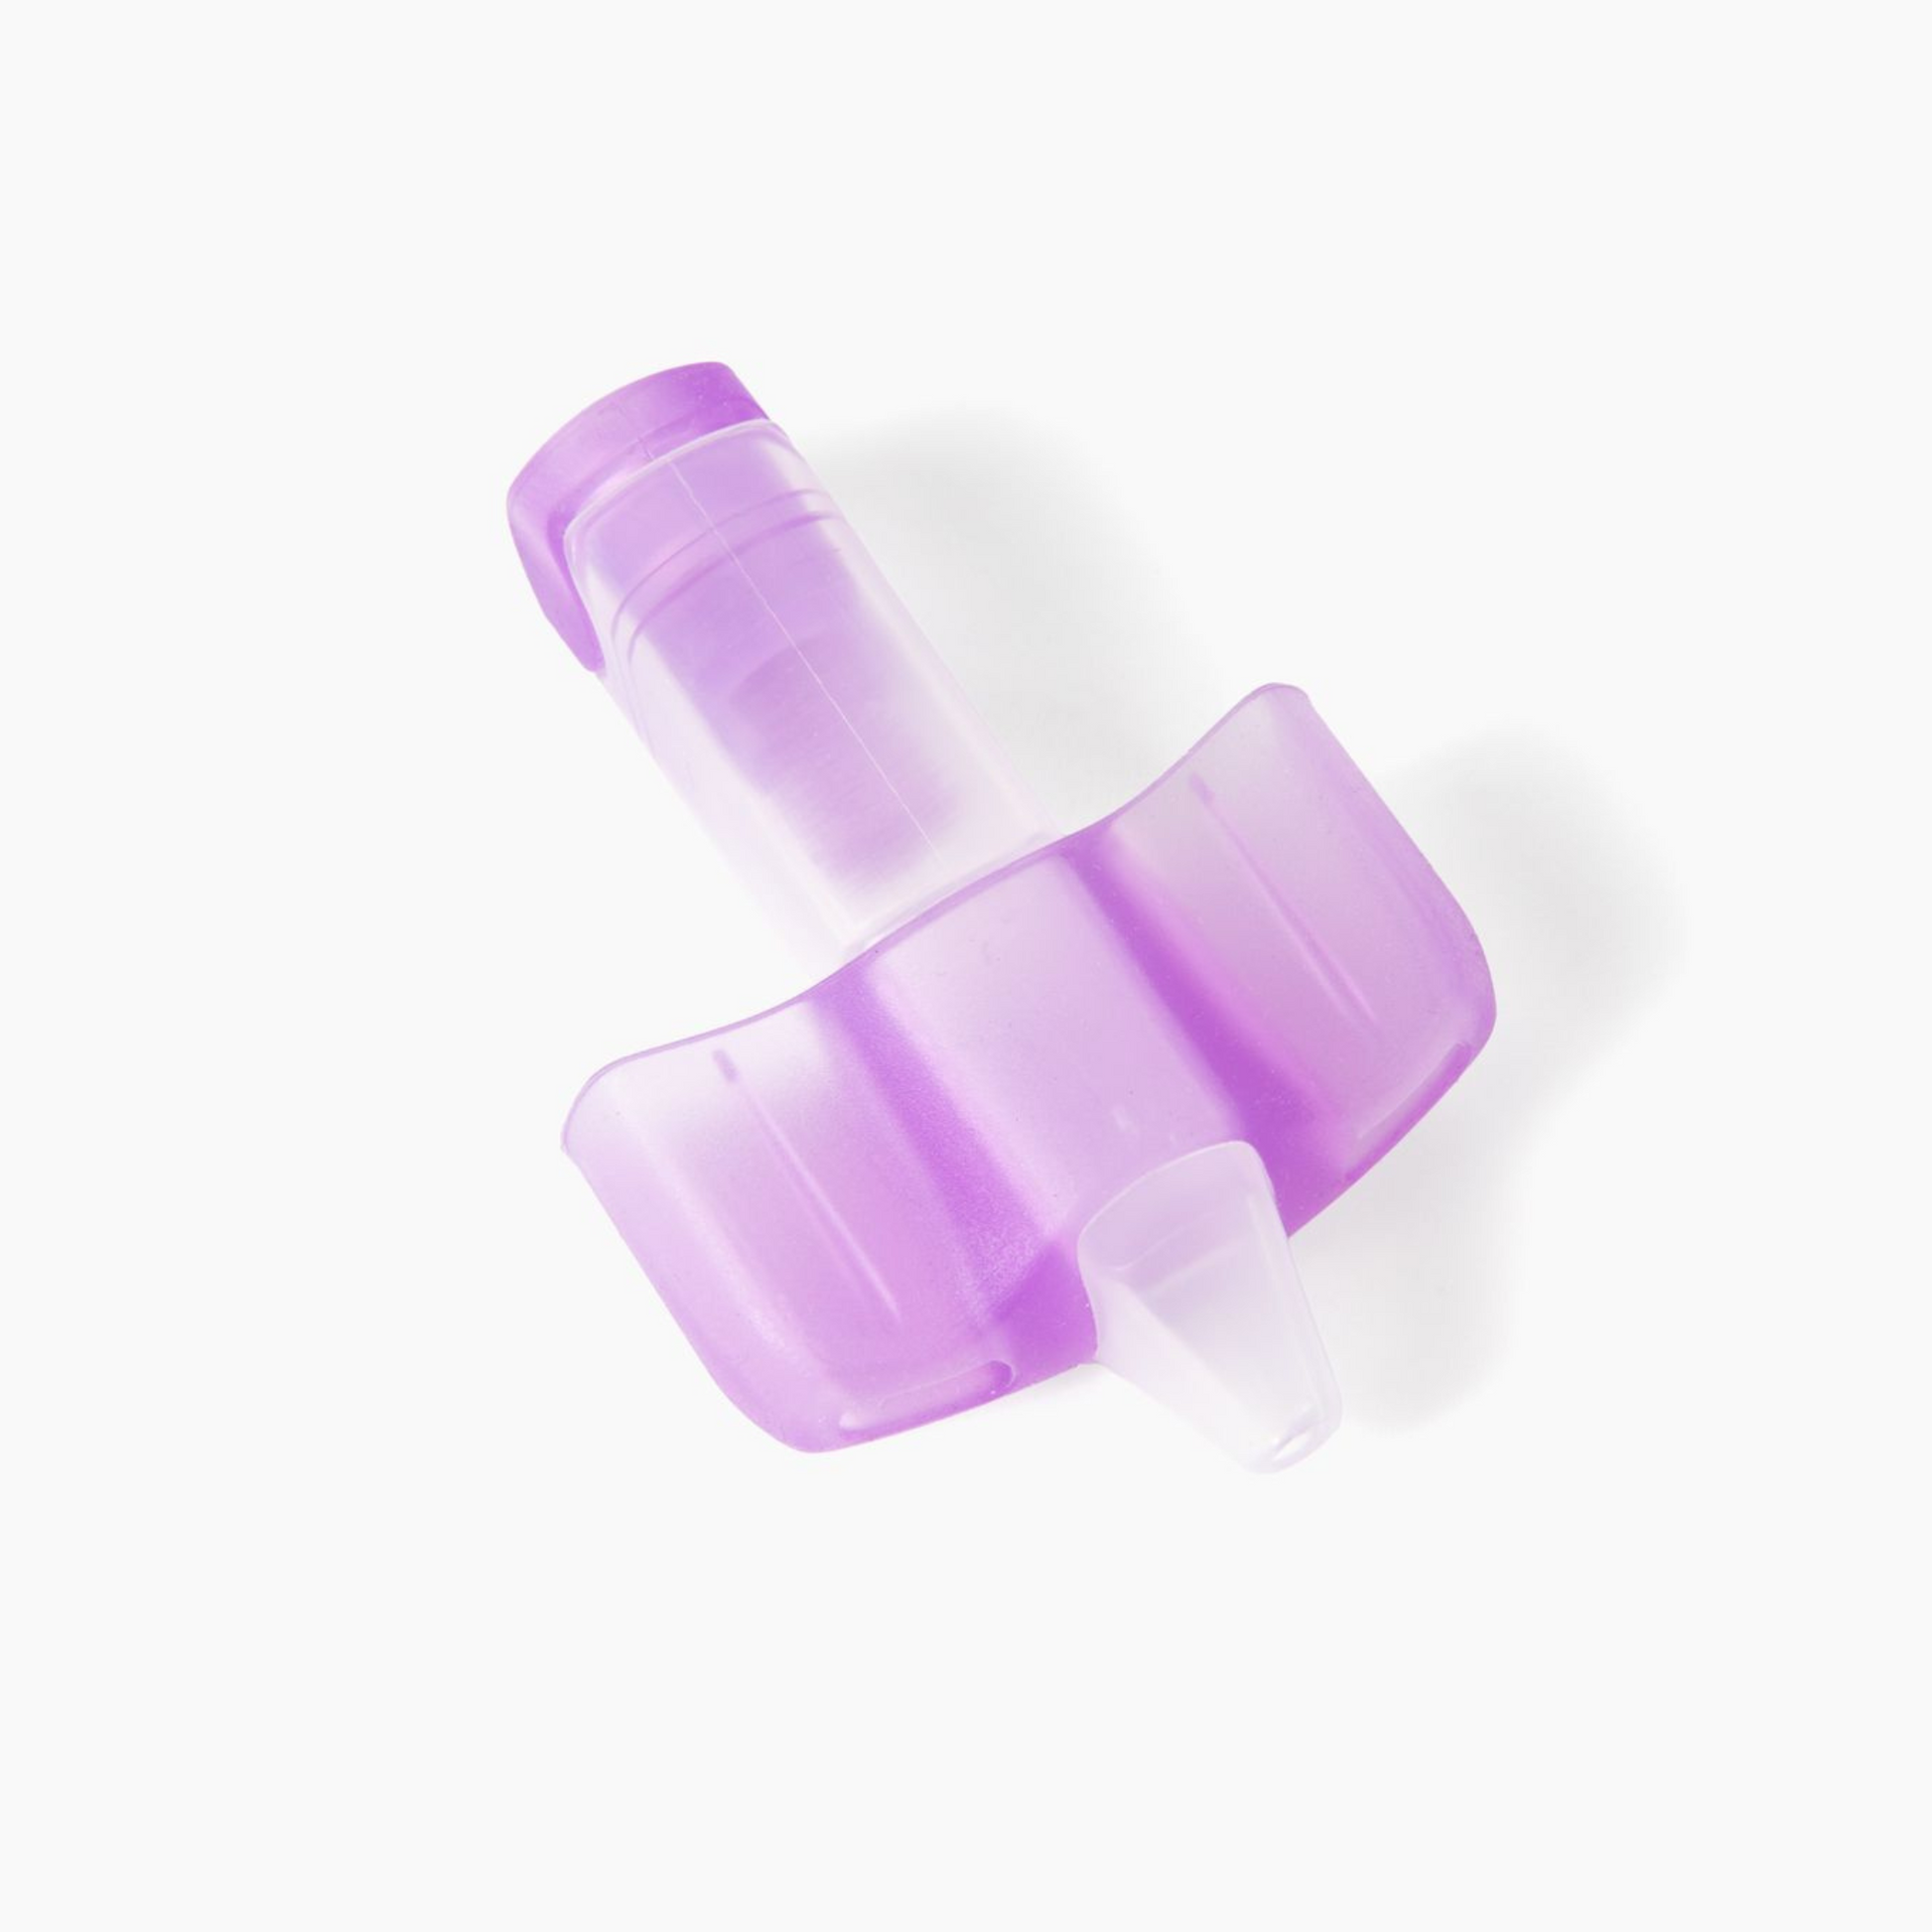 Infant Nasal Aspirator Kit - NozeBot Bundle